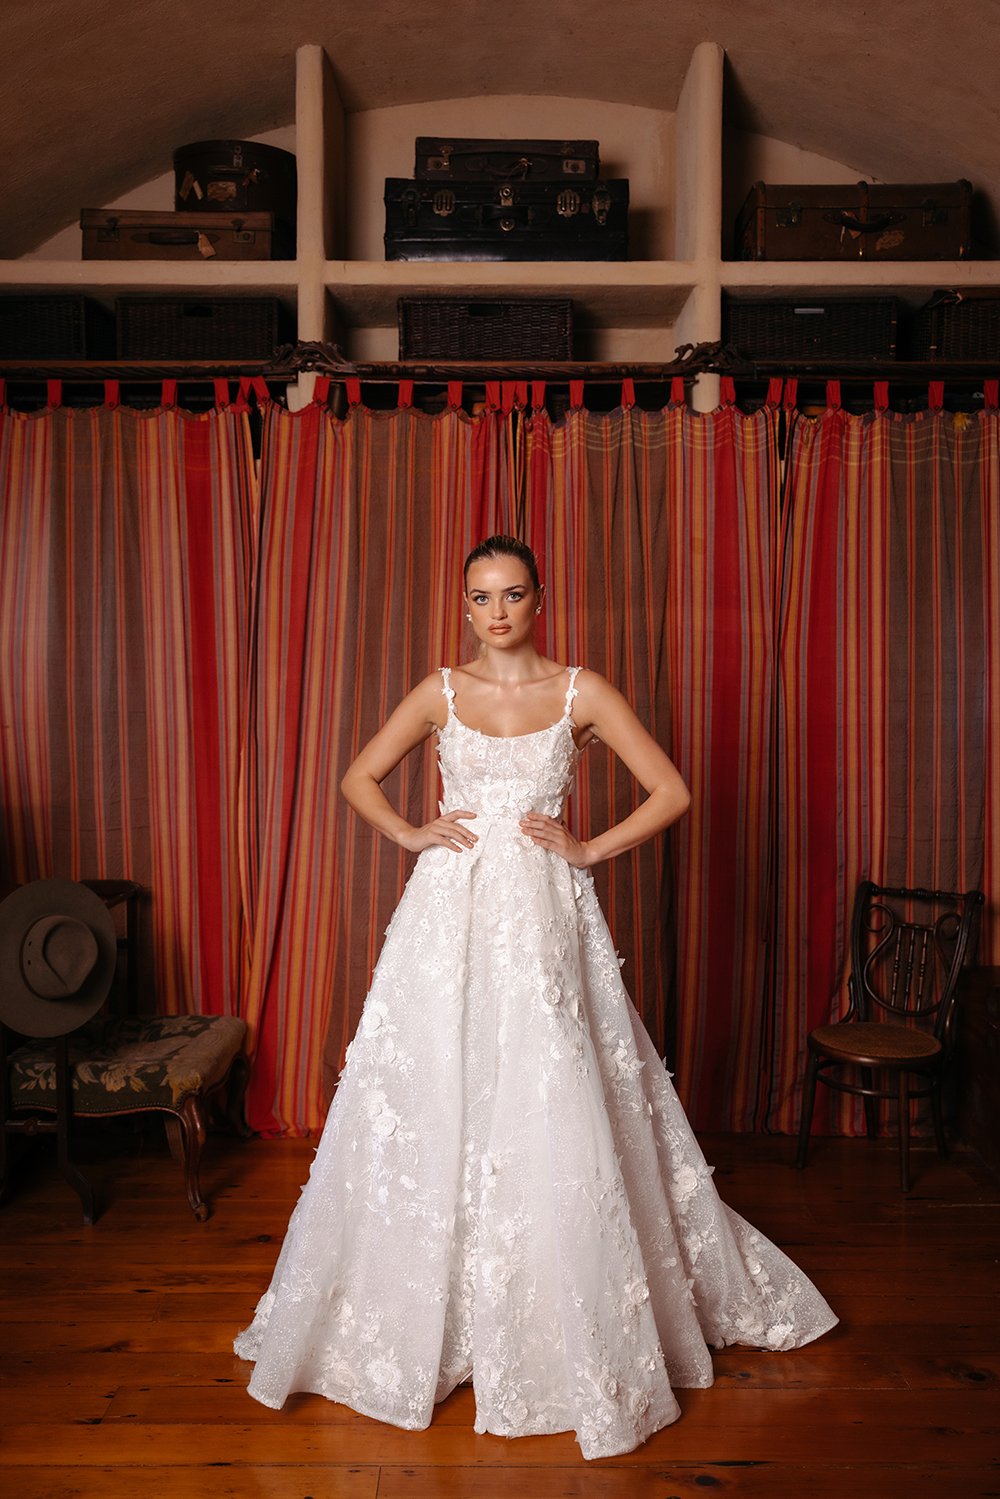 blanc-de-blanc-bridal-boutique-pittsburgh-dress-wedding-gown-casablanca-front.jpg